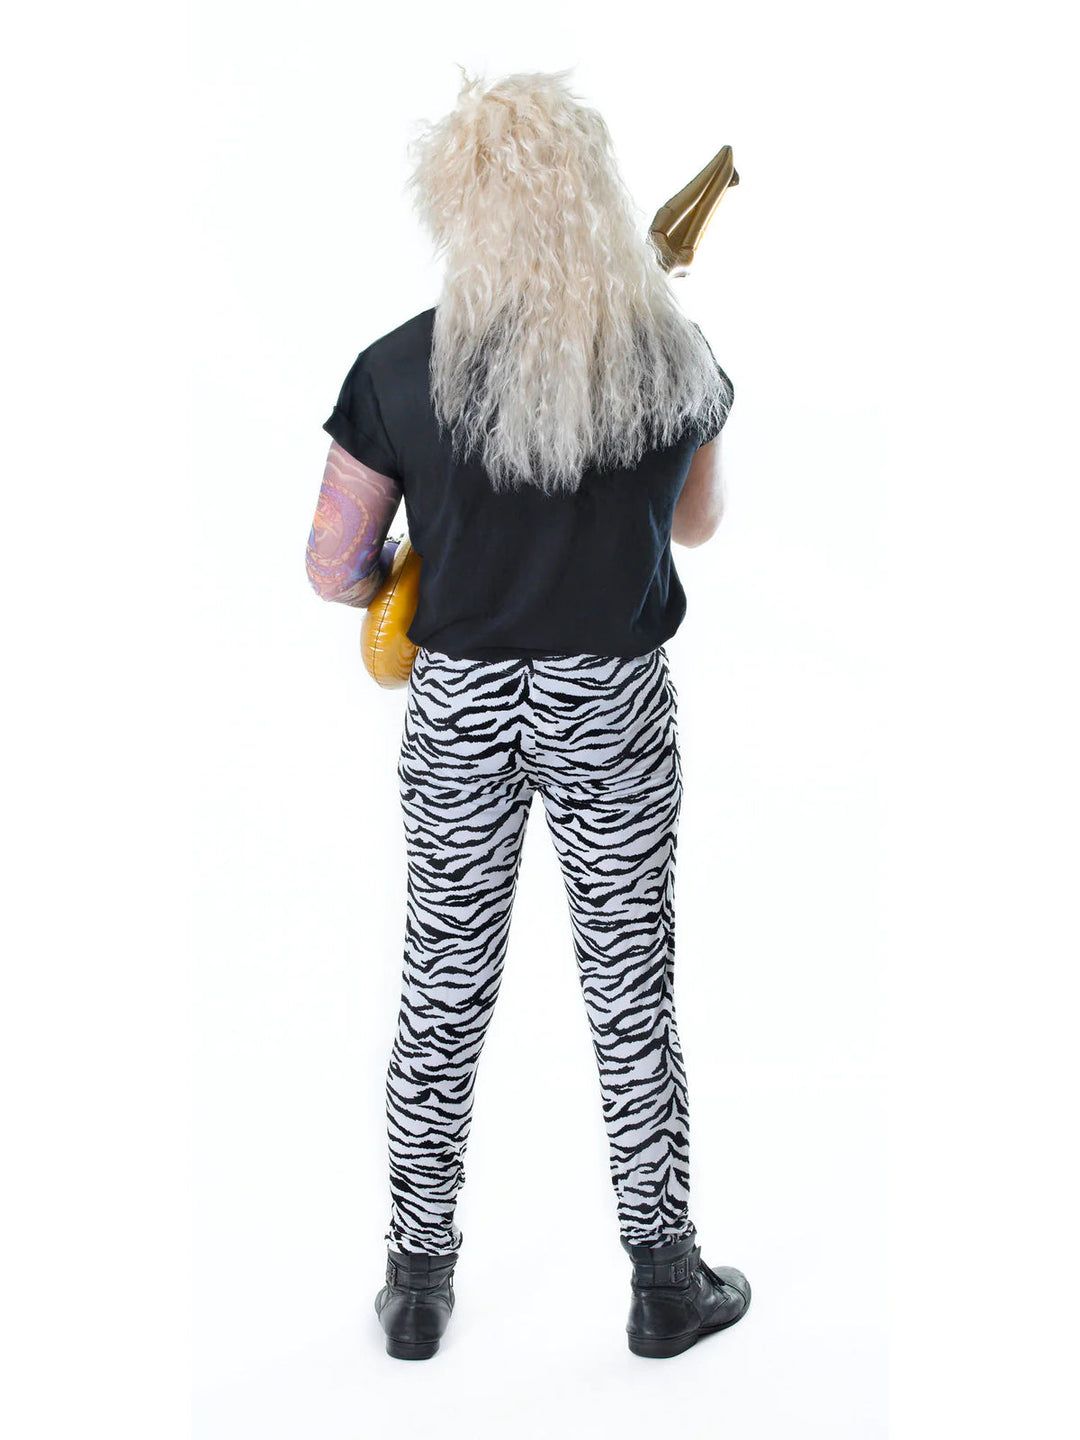 Zebra Print Trousers Adult Rocker Costume_2